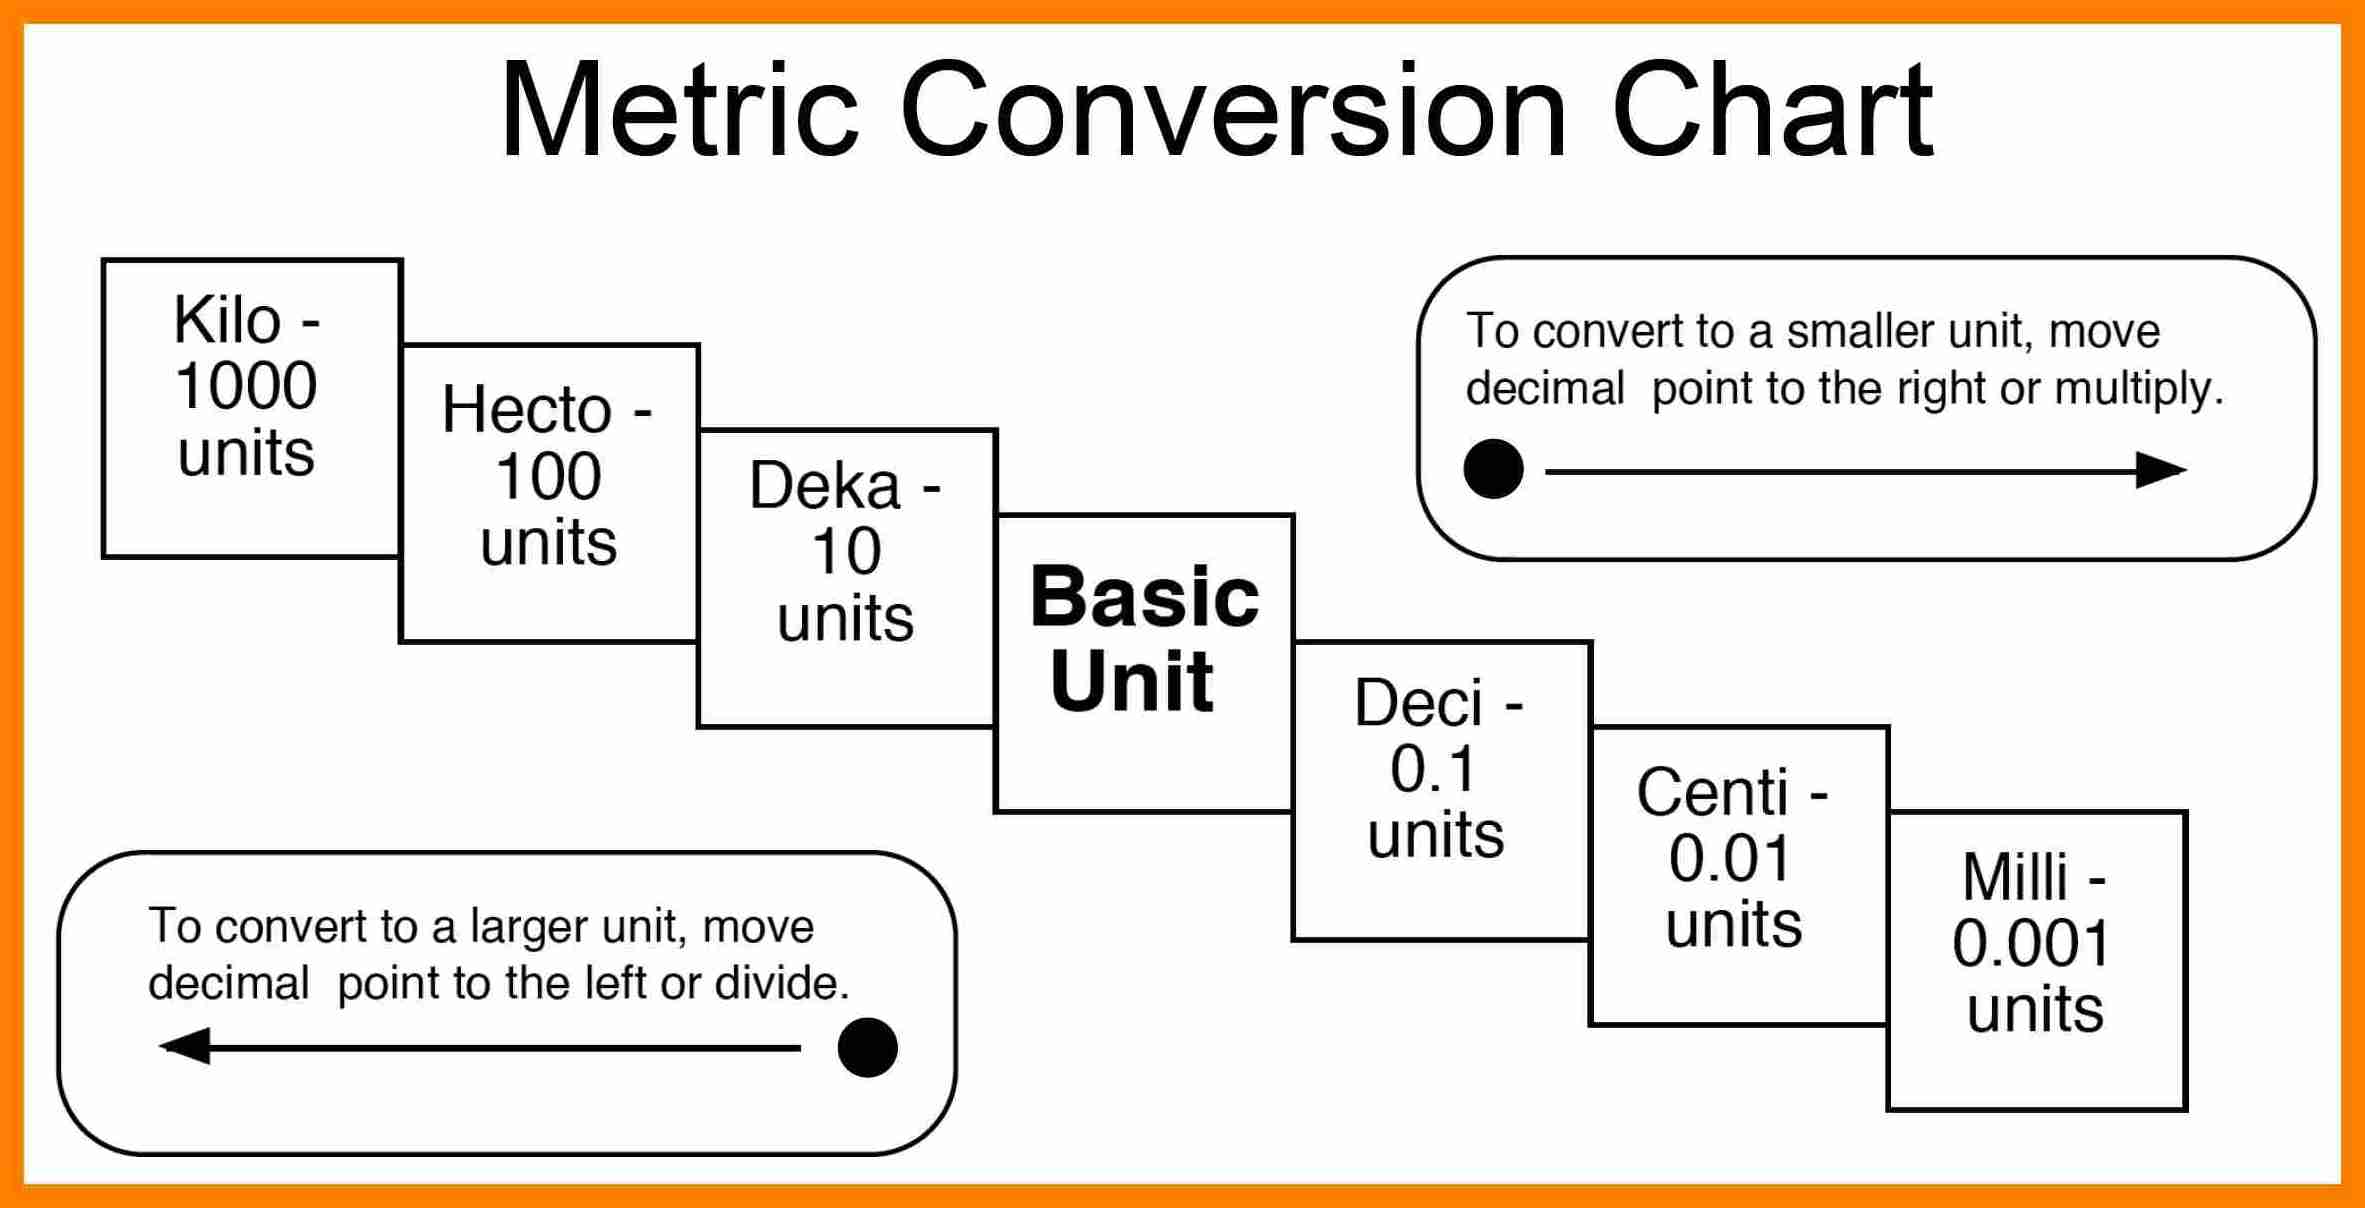 conversions-metric-to-standard-chart-fresh-9-metric-conversion-chart